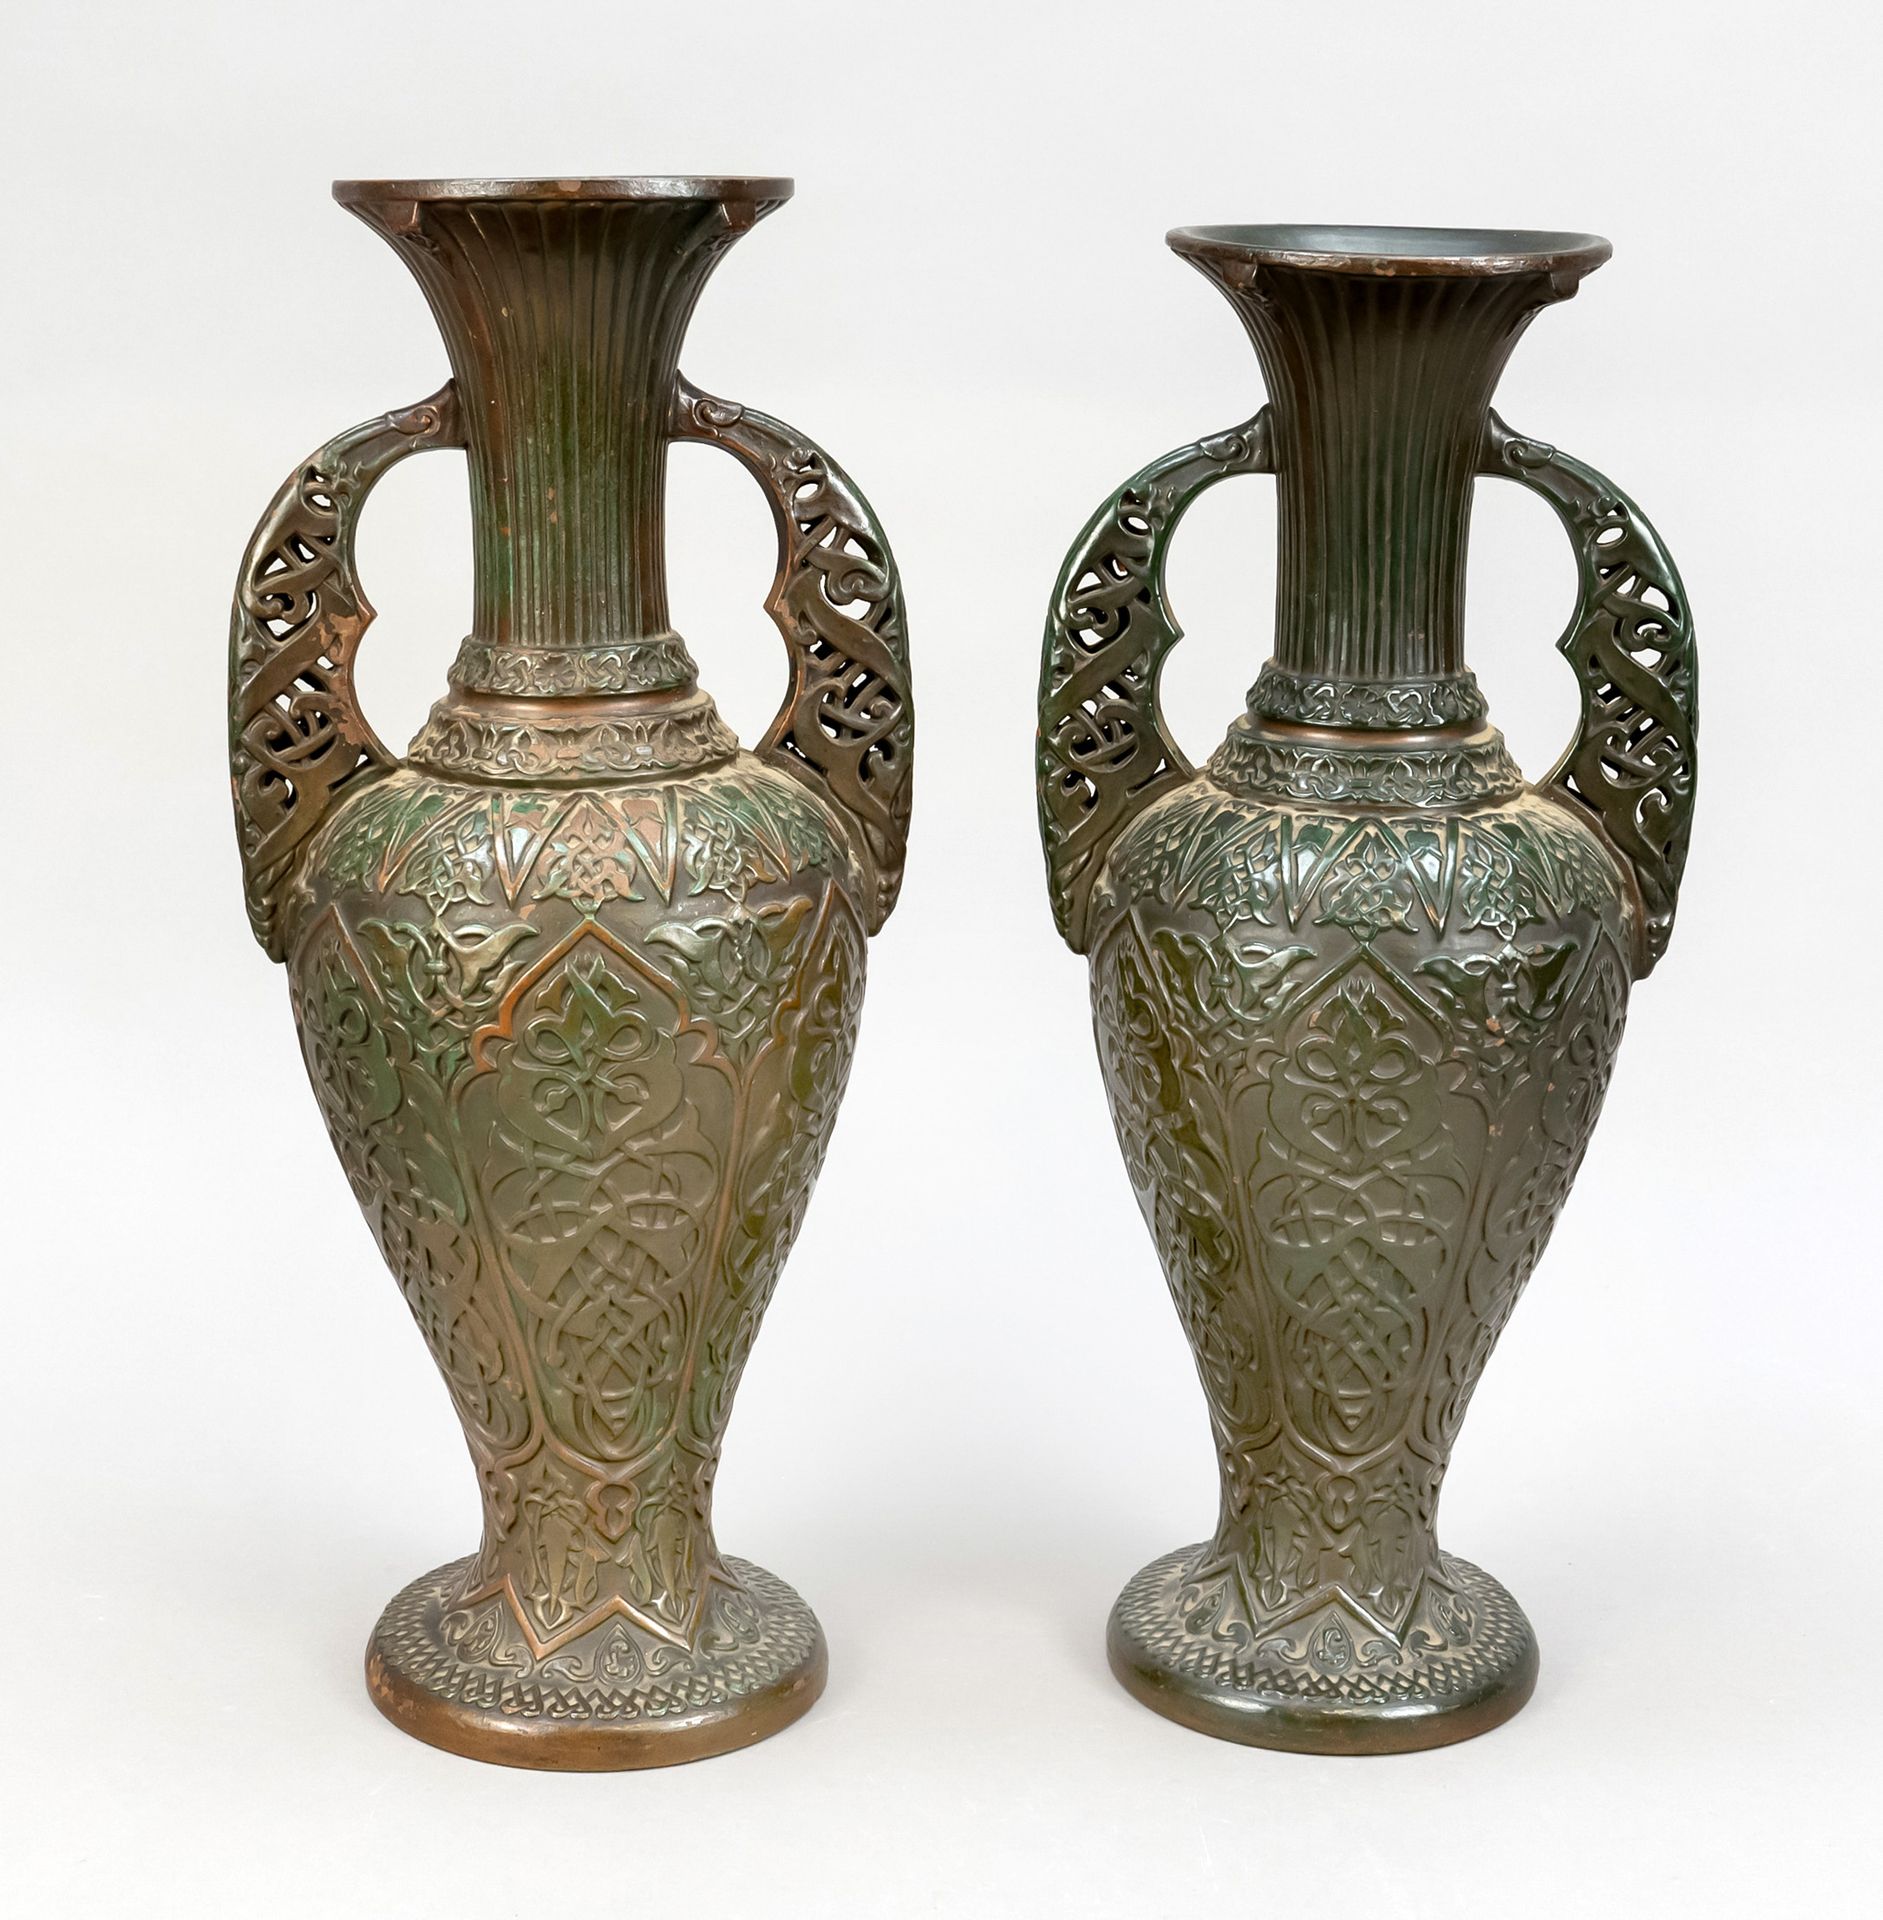 Null 一对花瓶，施泰因瑙，西里西亚，20世纪20年代，陶瓷，青铜光学的釉面，细长的双耳瓶形状，两侧有把手，镂空，高37厘米